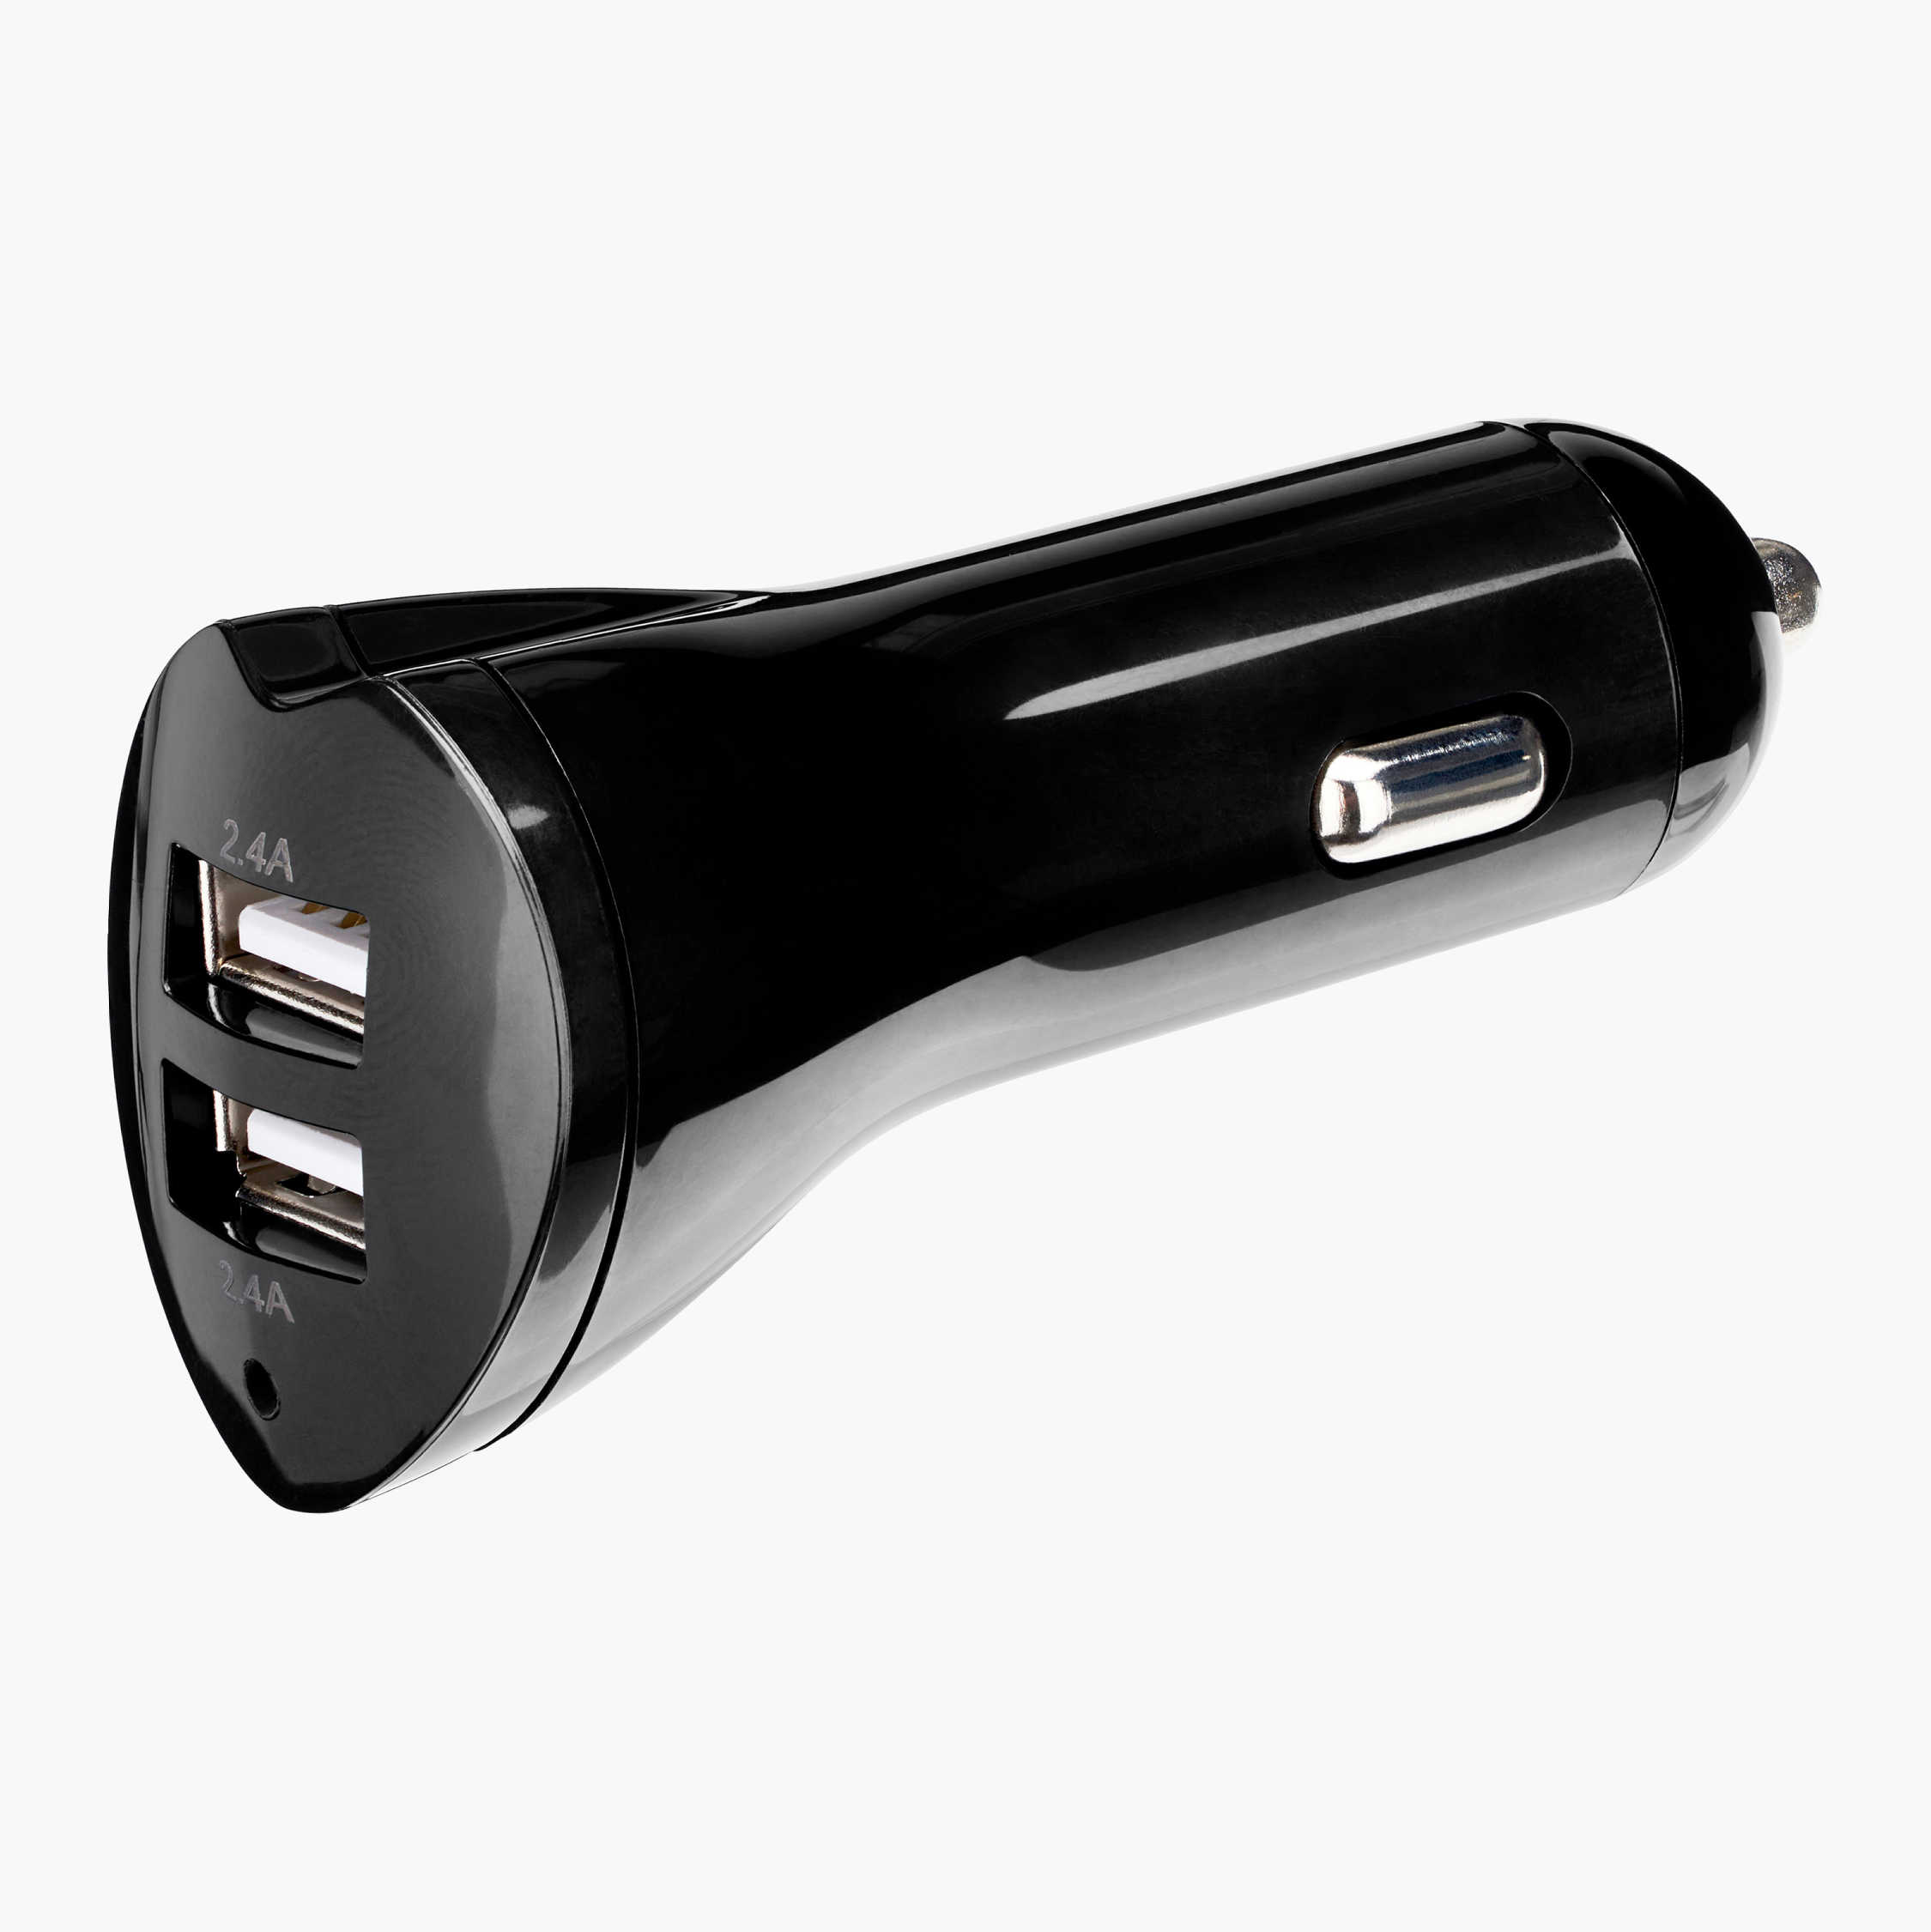 OYJJ Car USB Interface Car Charger Modified Dual USB Charger Socket with LED Digital Voltmeter Gauge for Nissan Sunshine 